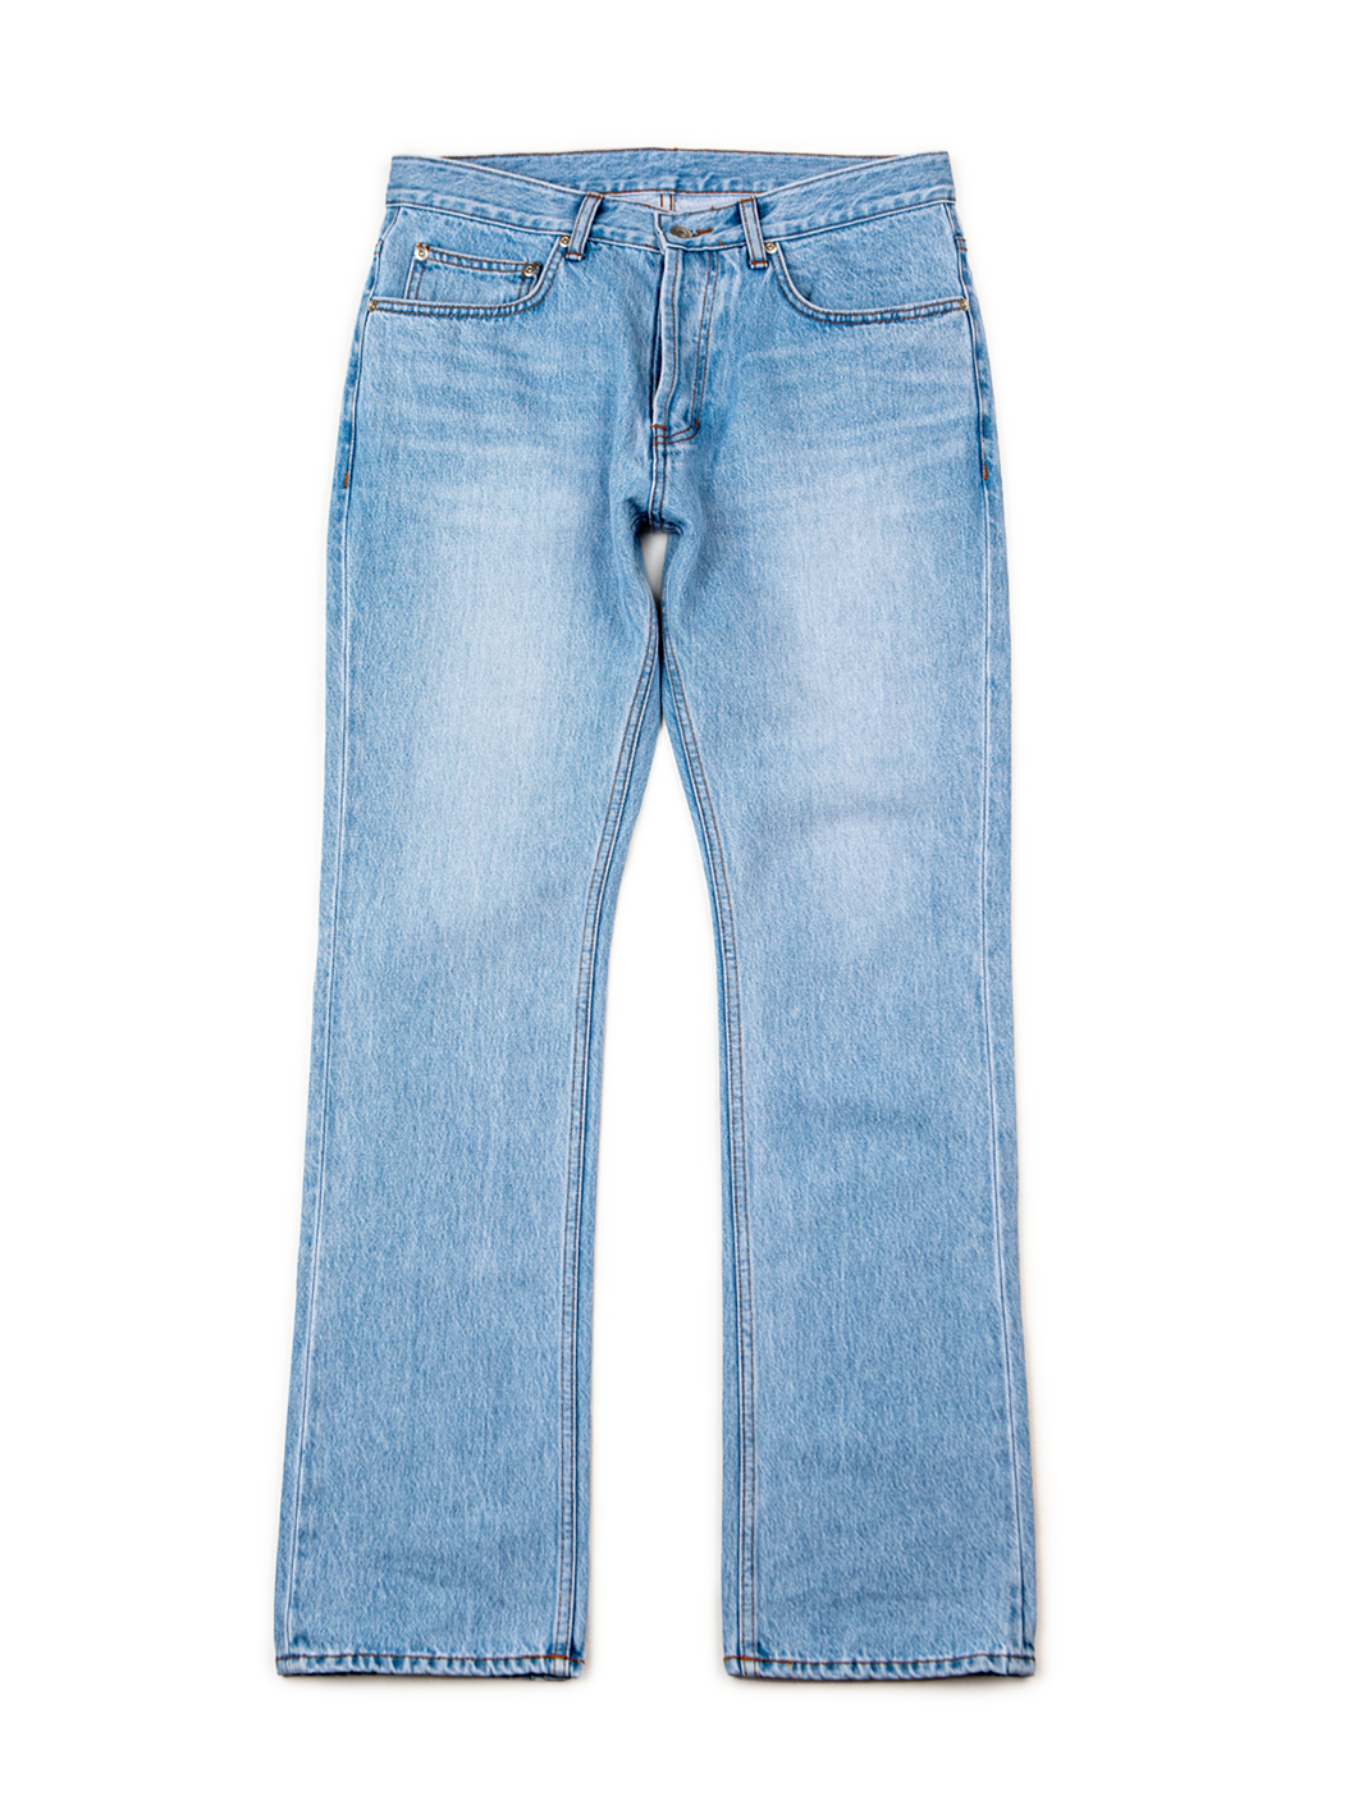 Symmetric flare jeans #11 [light blue]